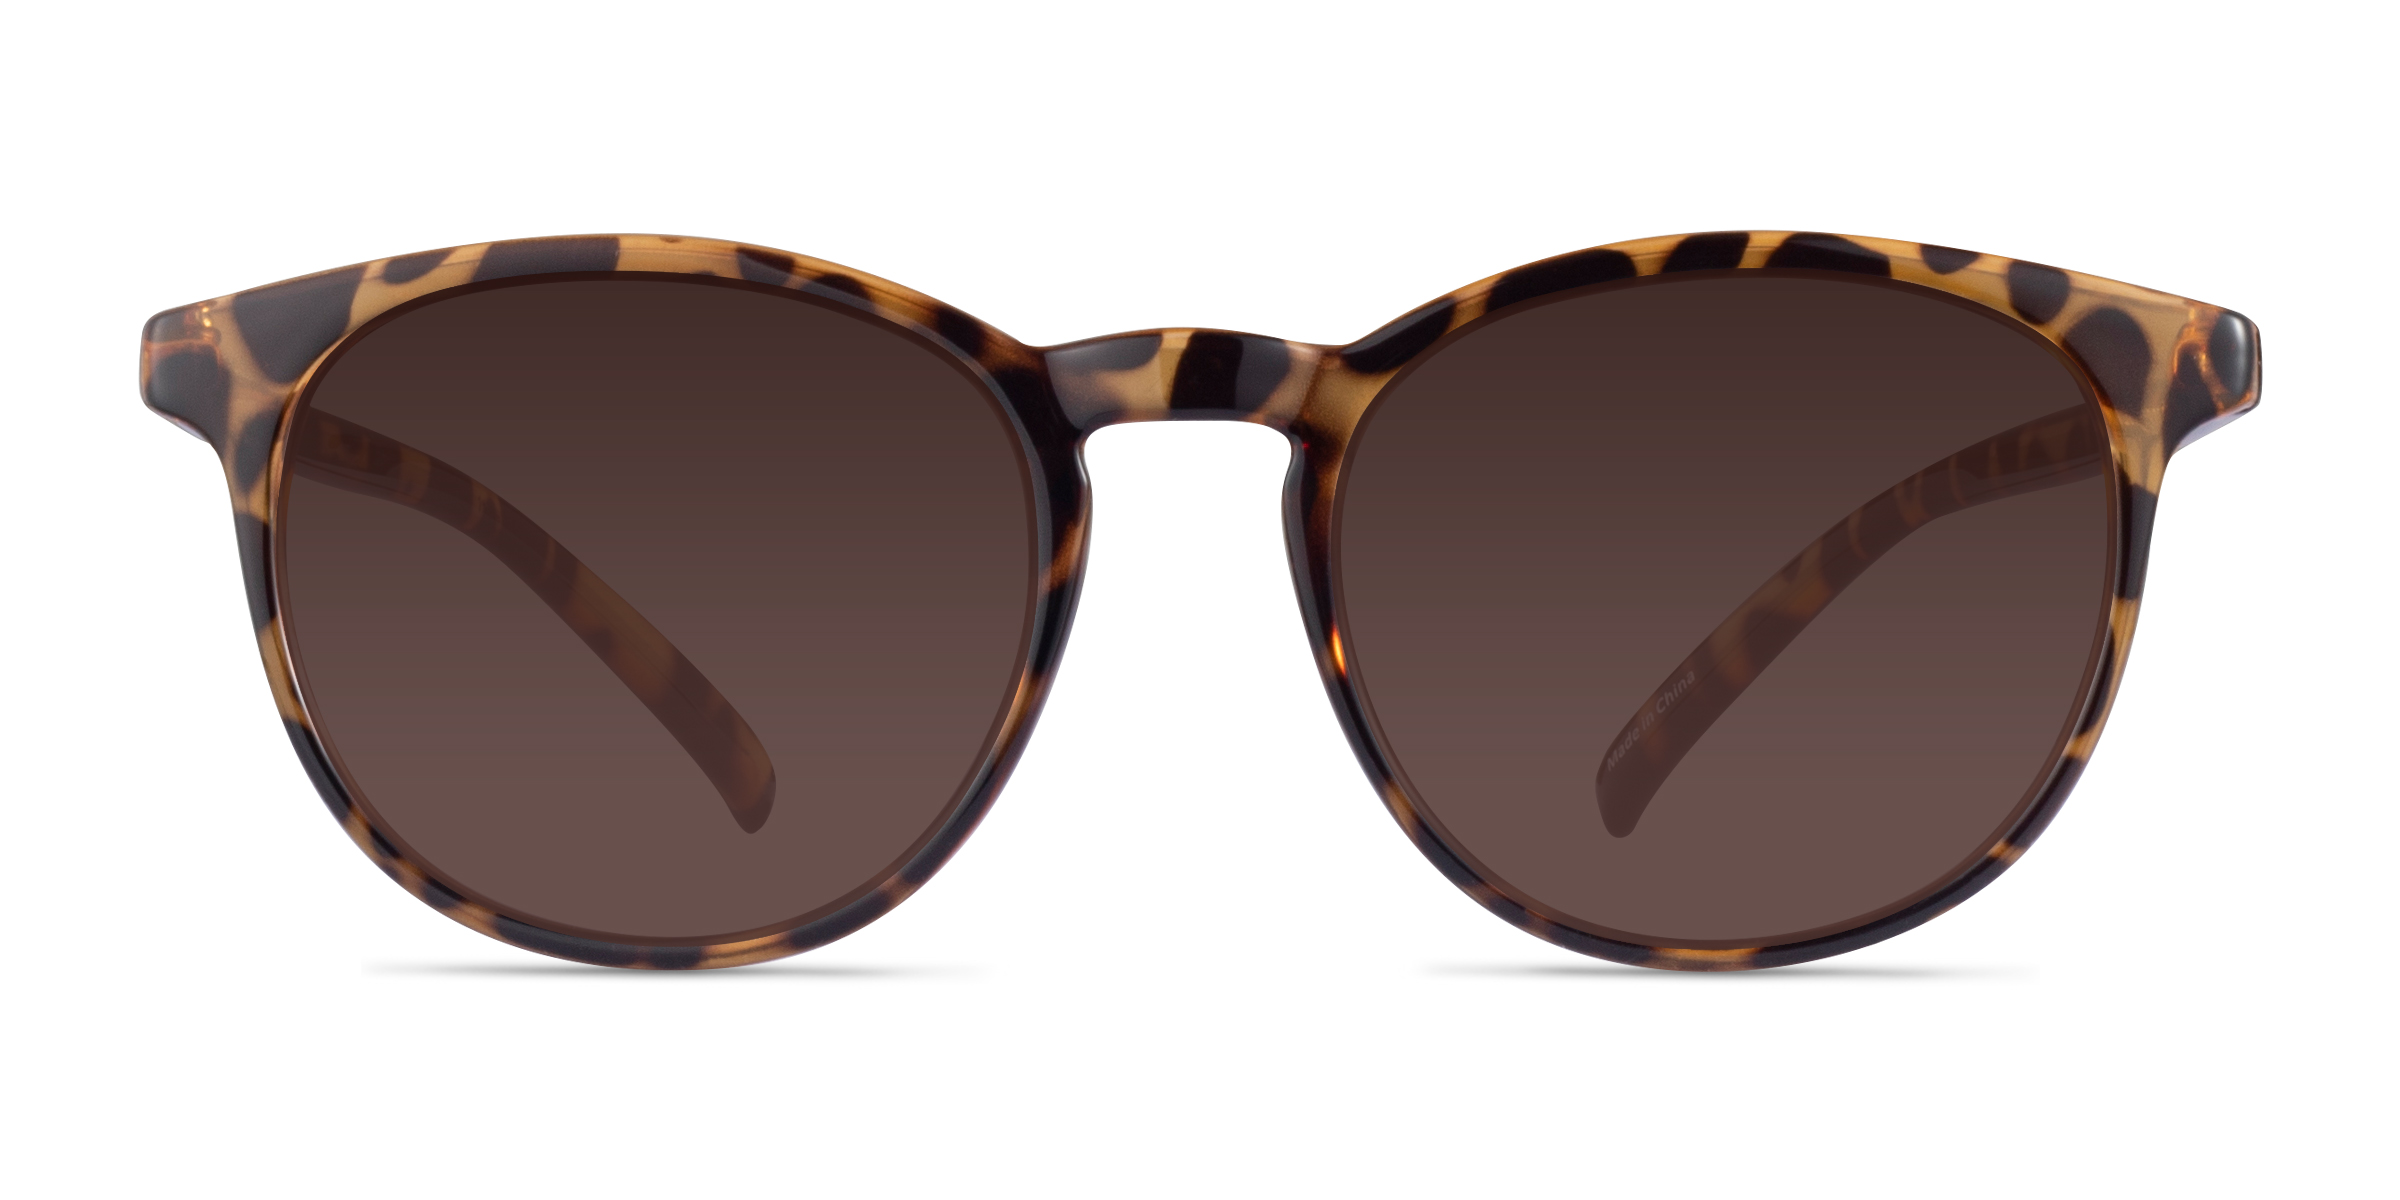 Deja Vu - Round Brown & Tortoise Frame Sunglasses For Women | Eyebuydirect